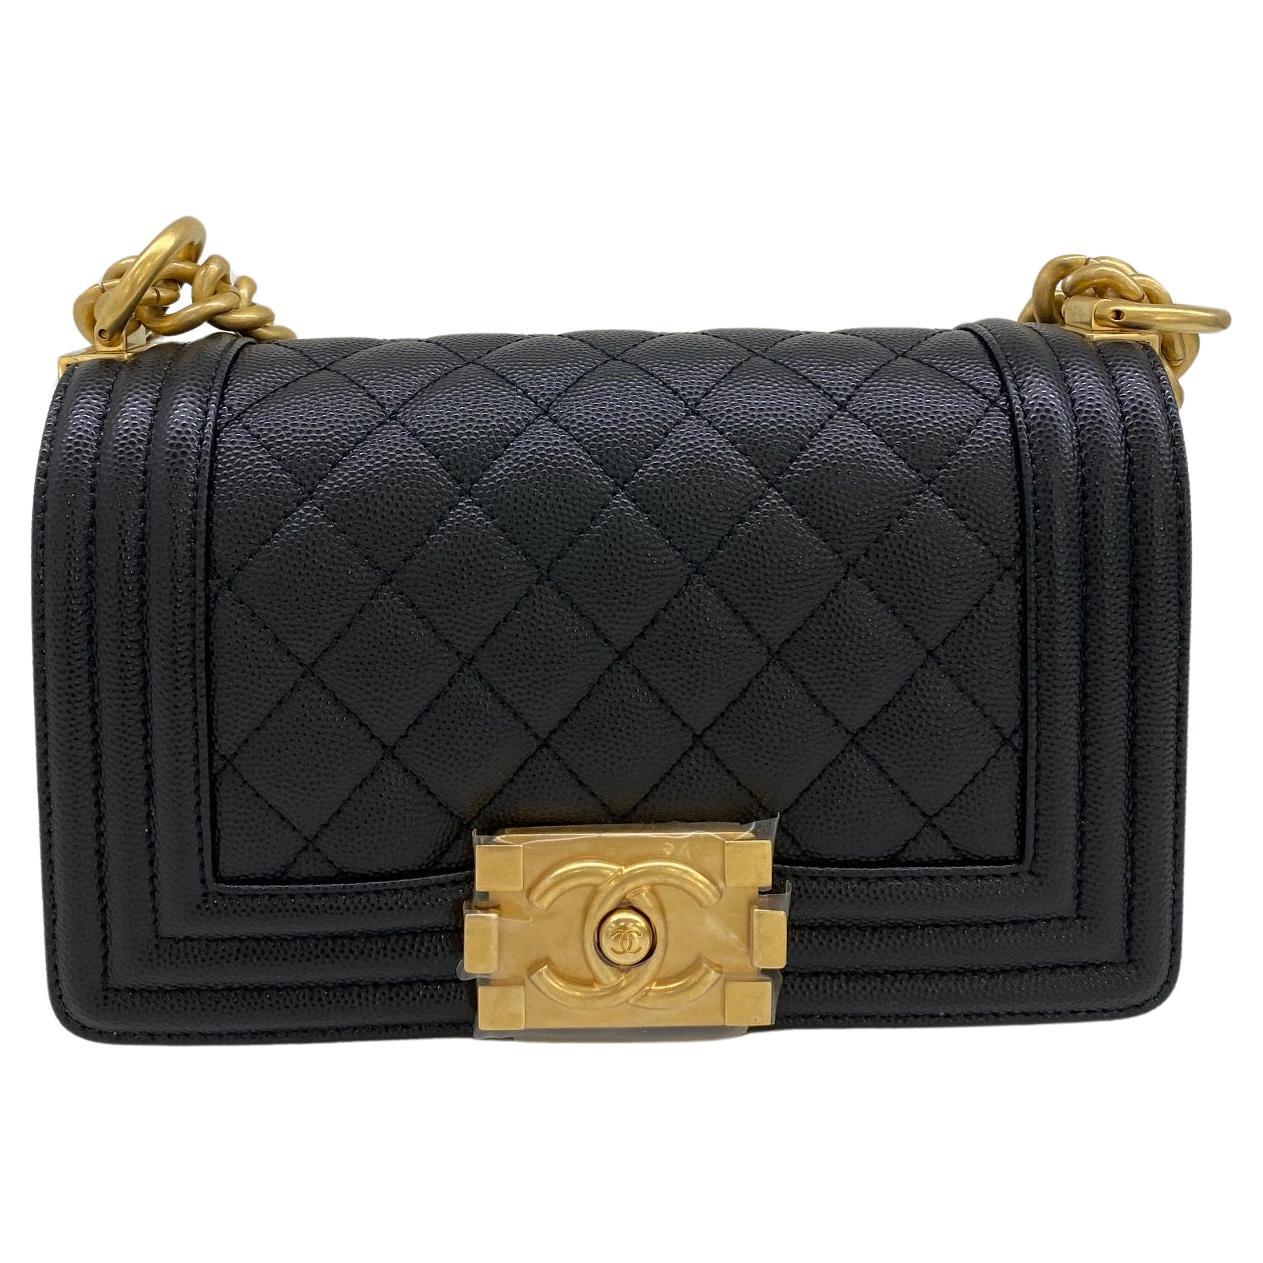 Chanel Boy Bag Small Black GHW For Sale